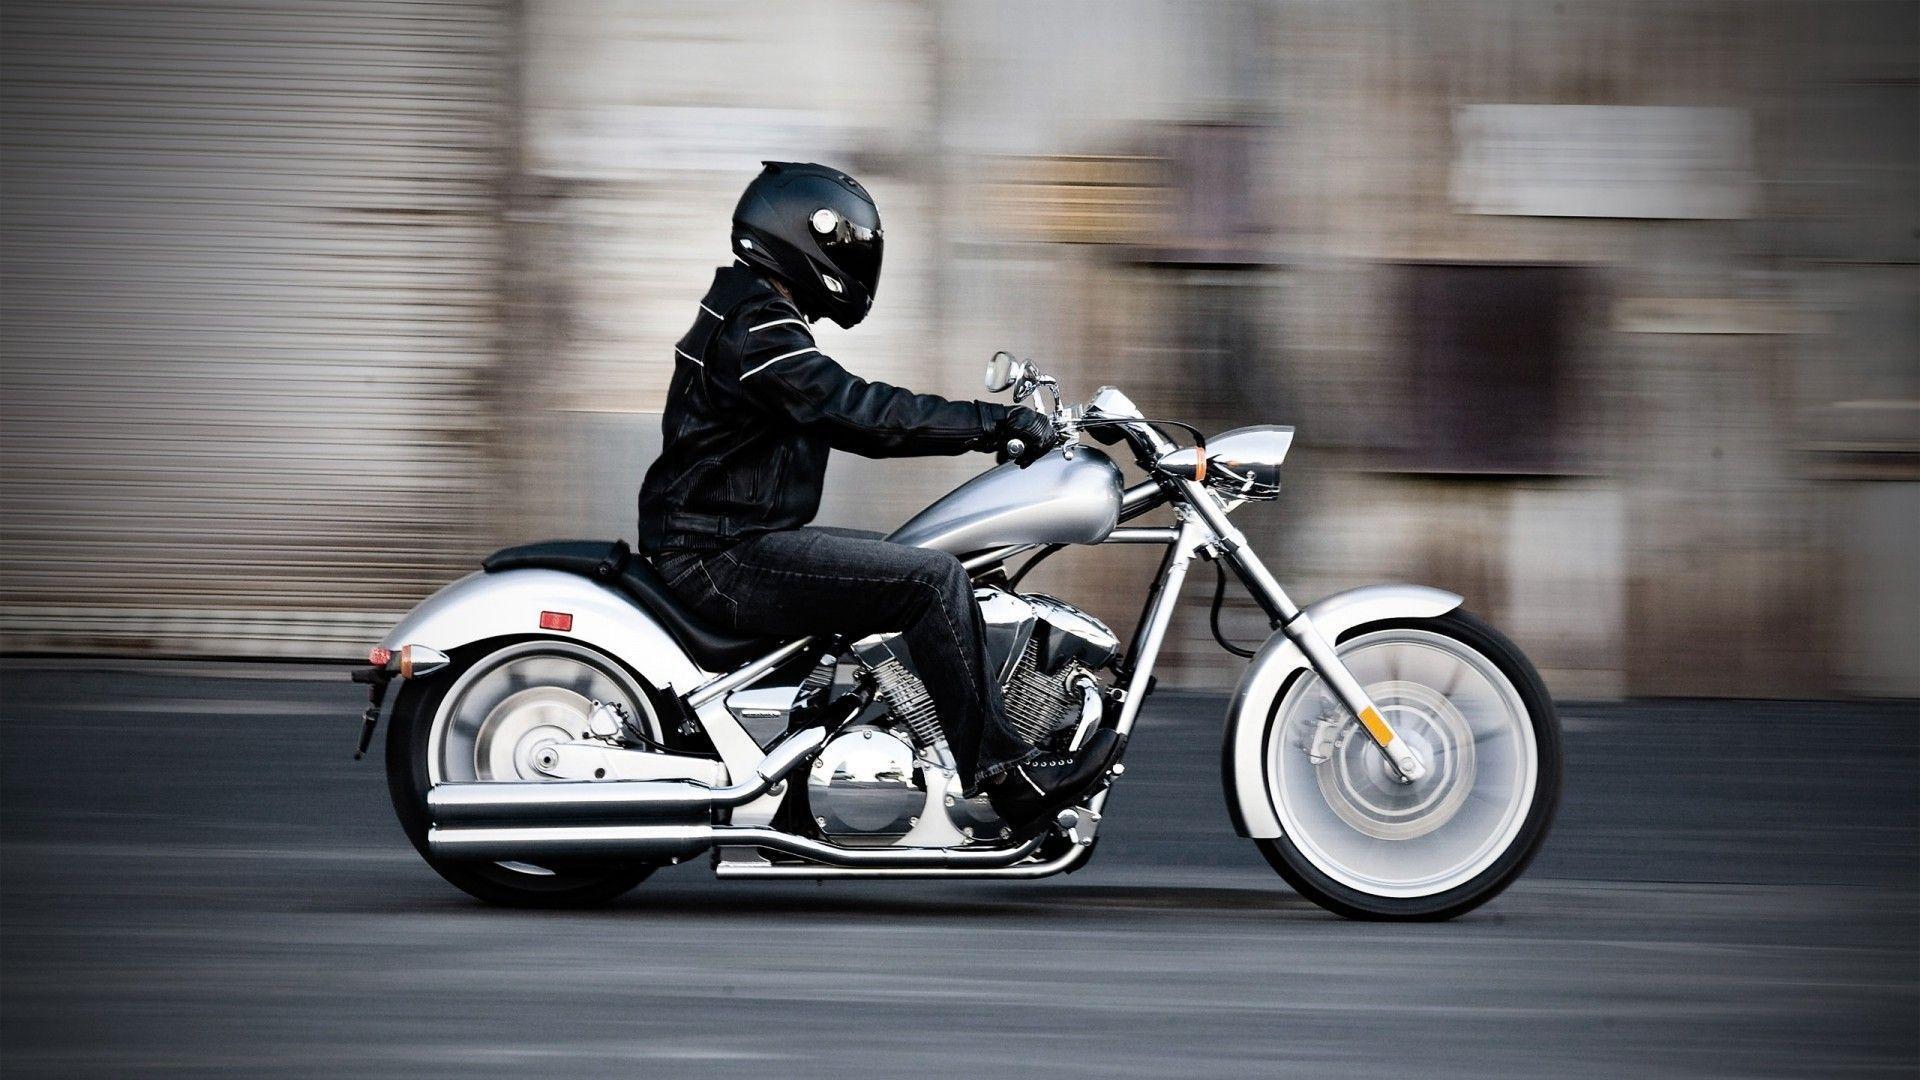 Harley Davidson Wallpaper Widescreen For Desktop. Harley Davidson